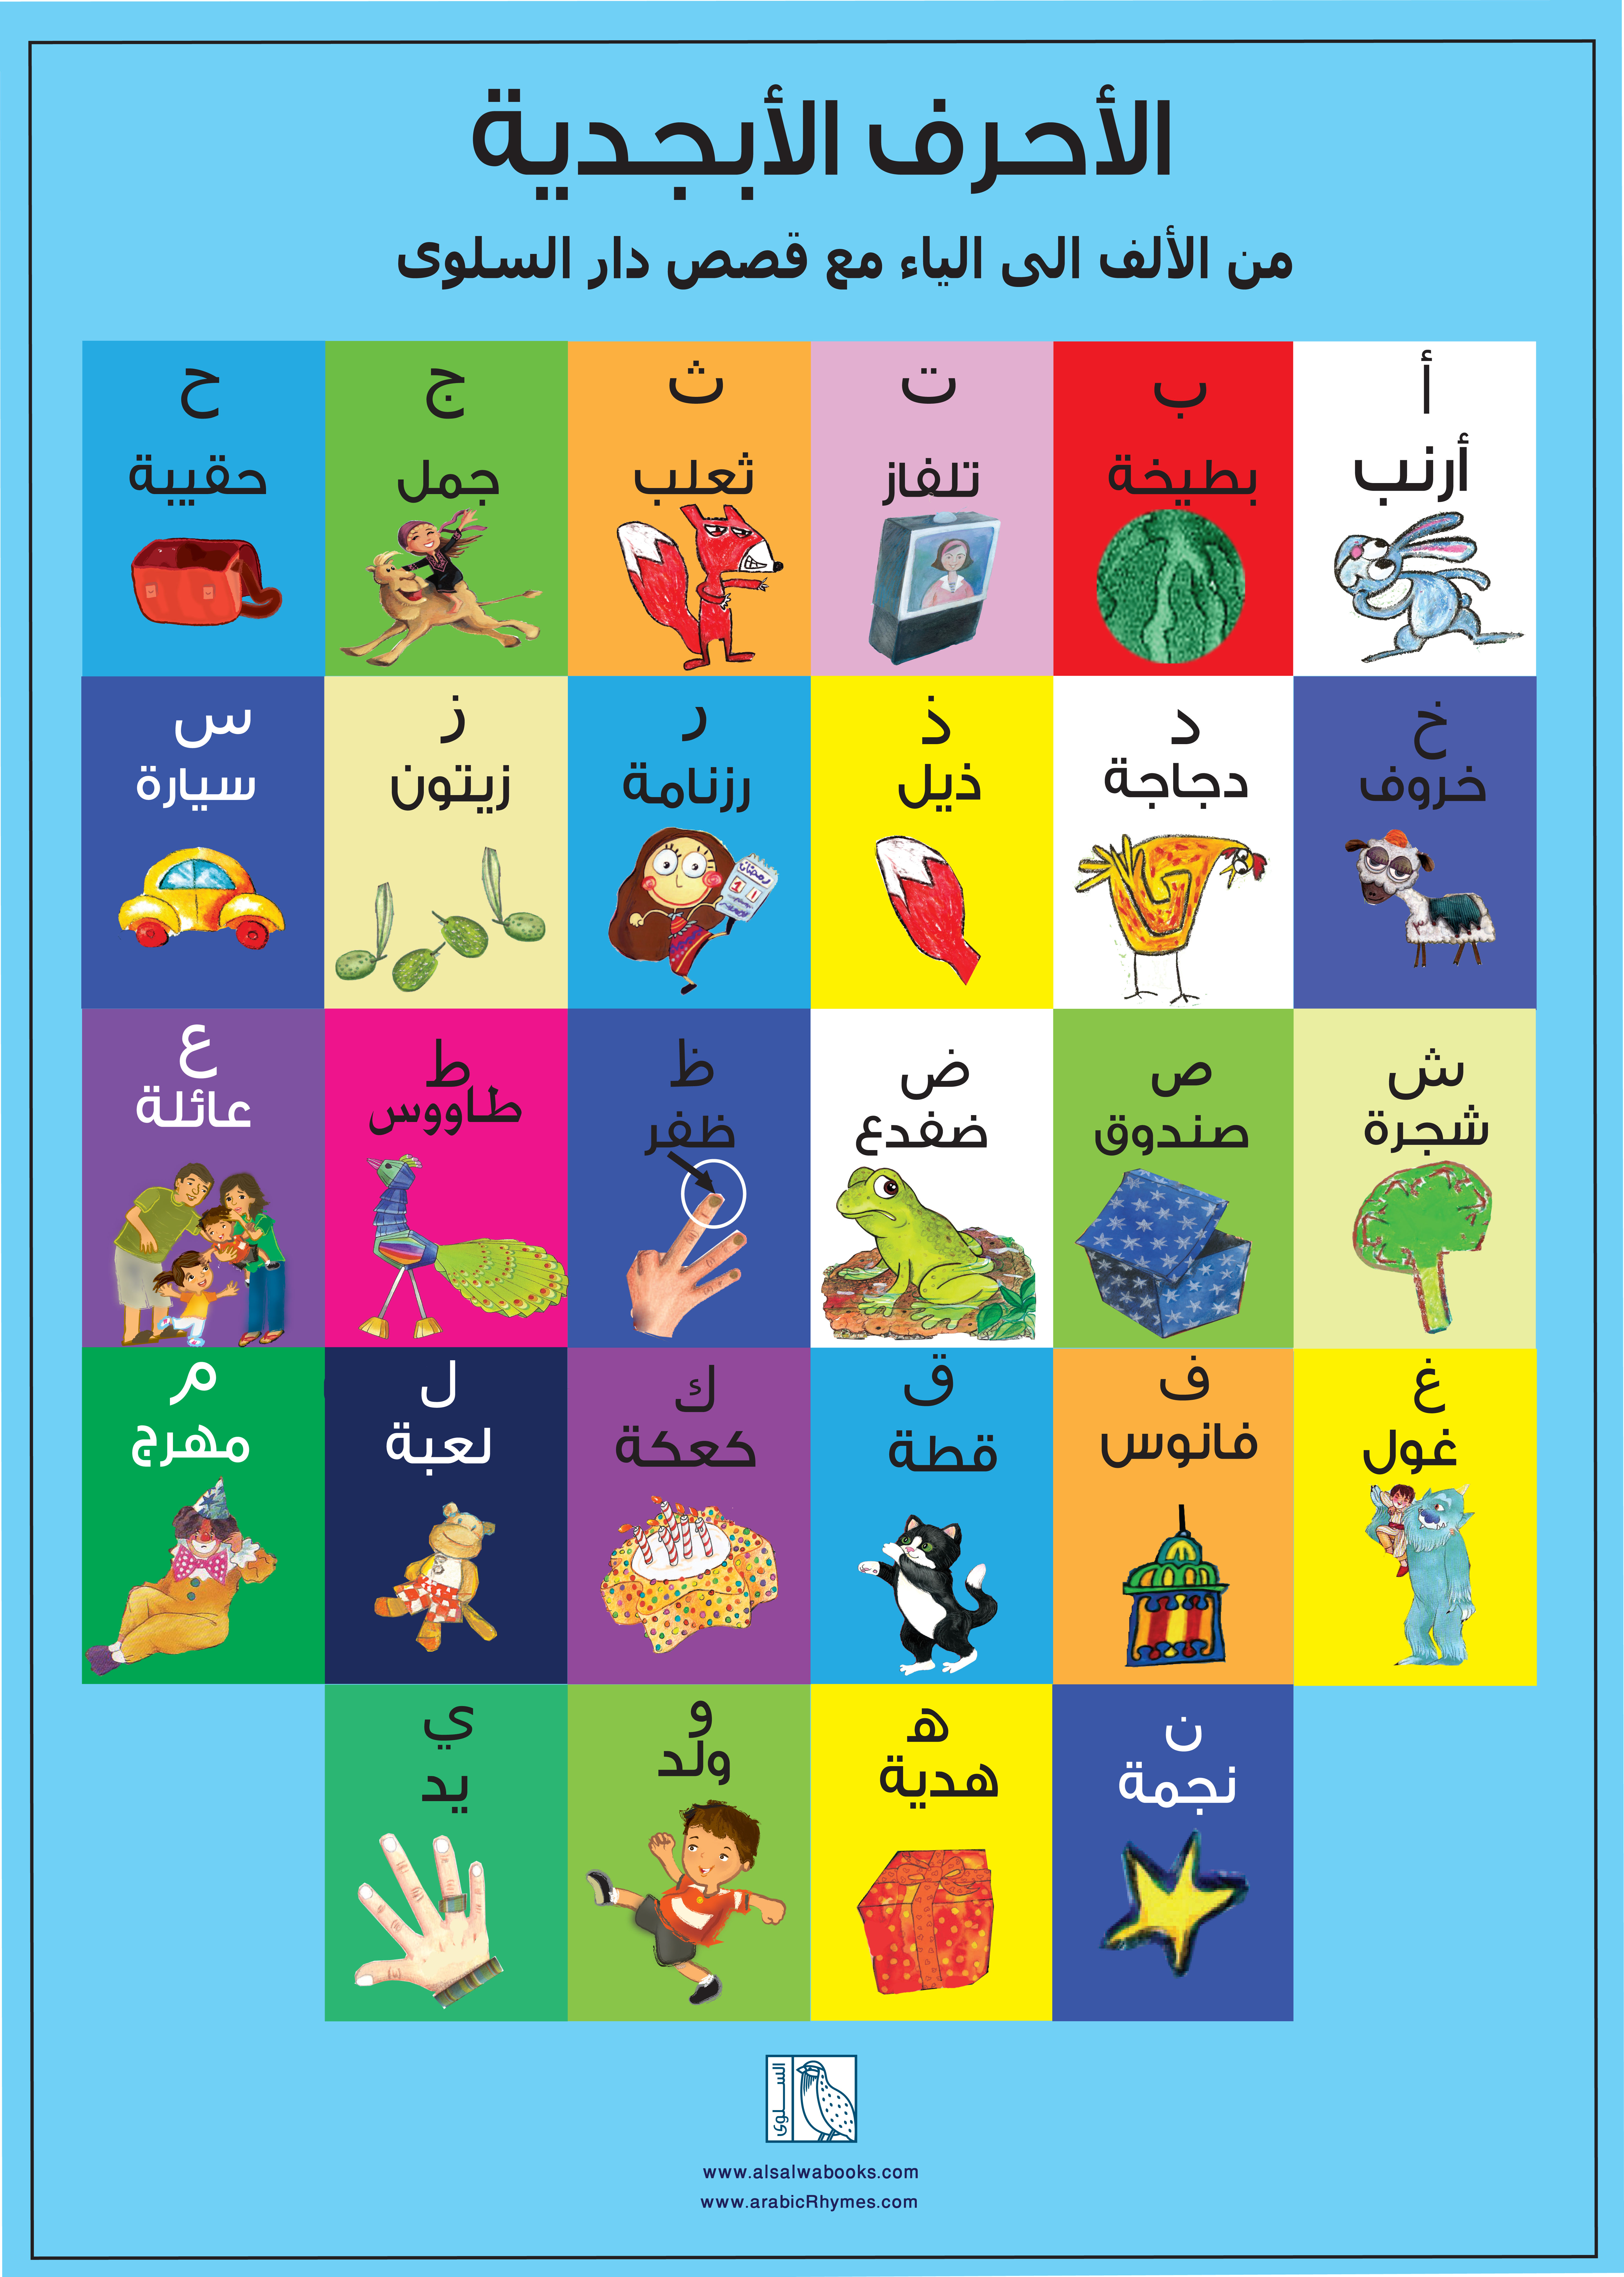 free-arabic-alphabet-cliparts-download-free-arabic-alphabet-cliparts-png-images-free-cliparts